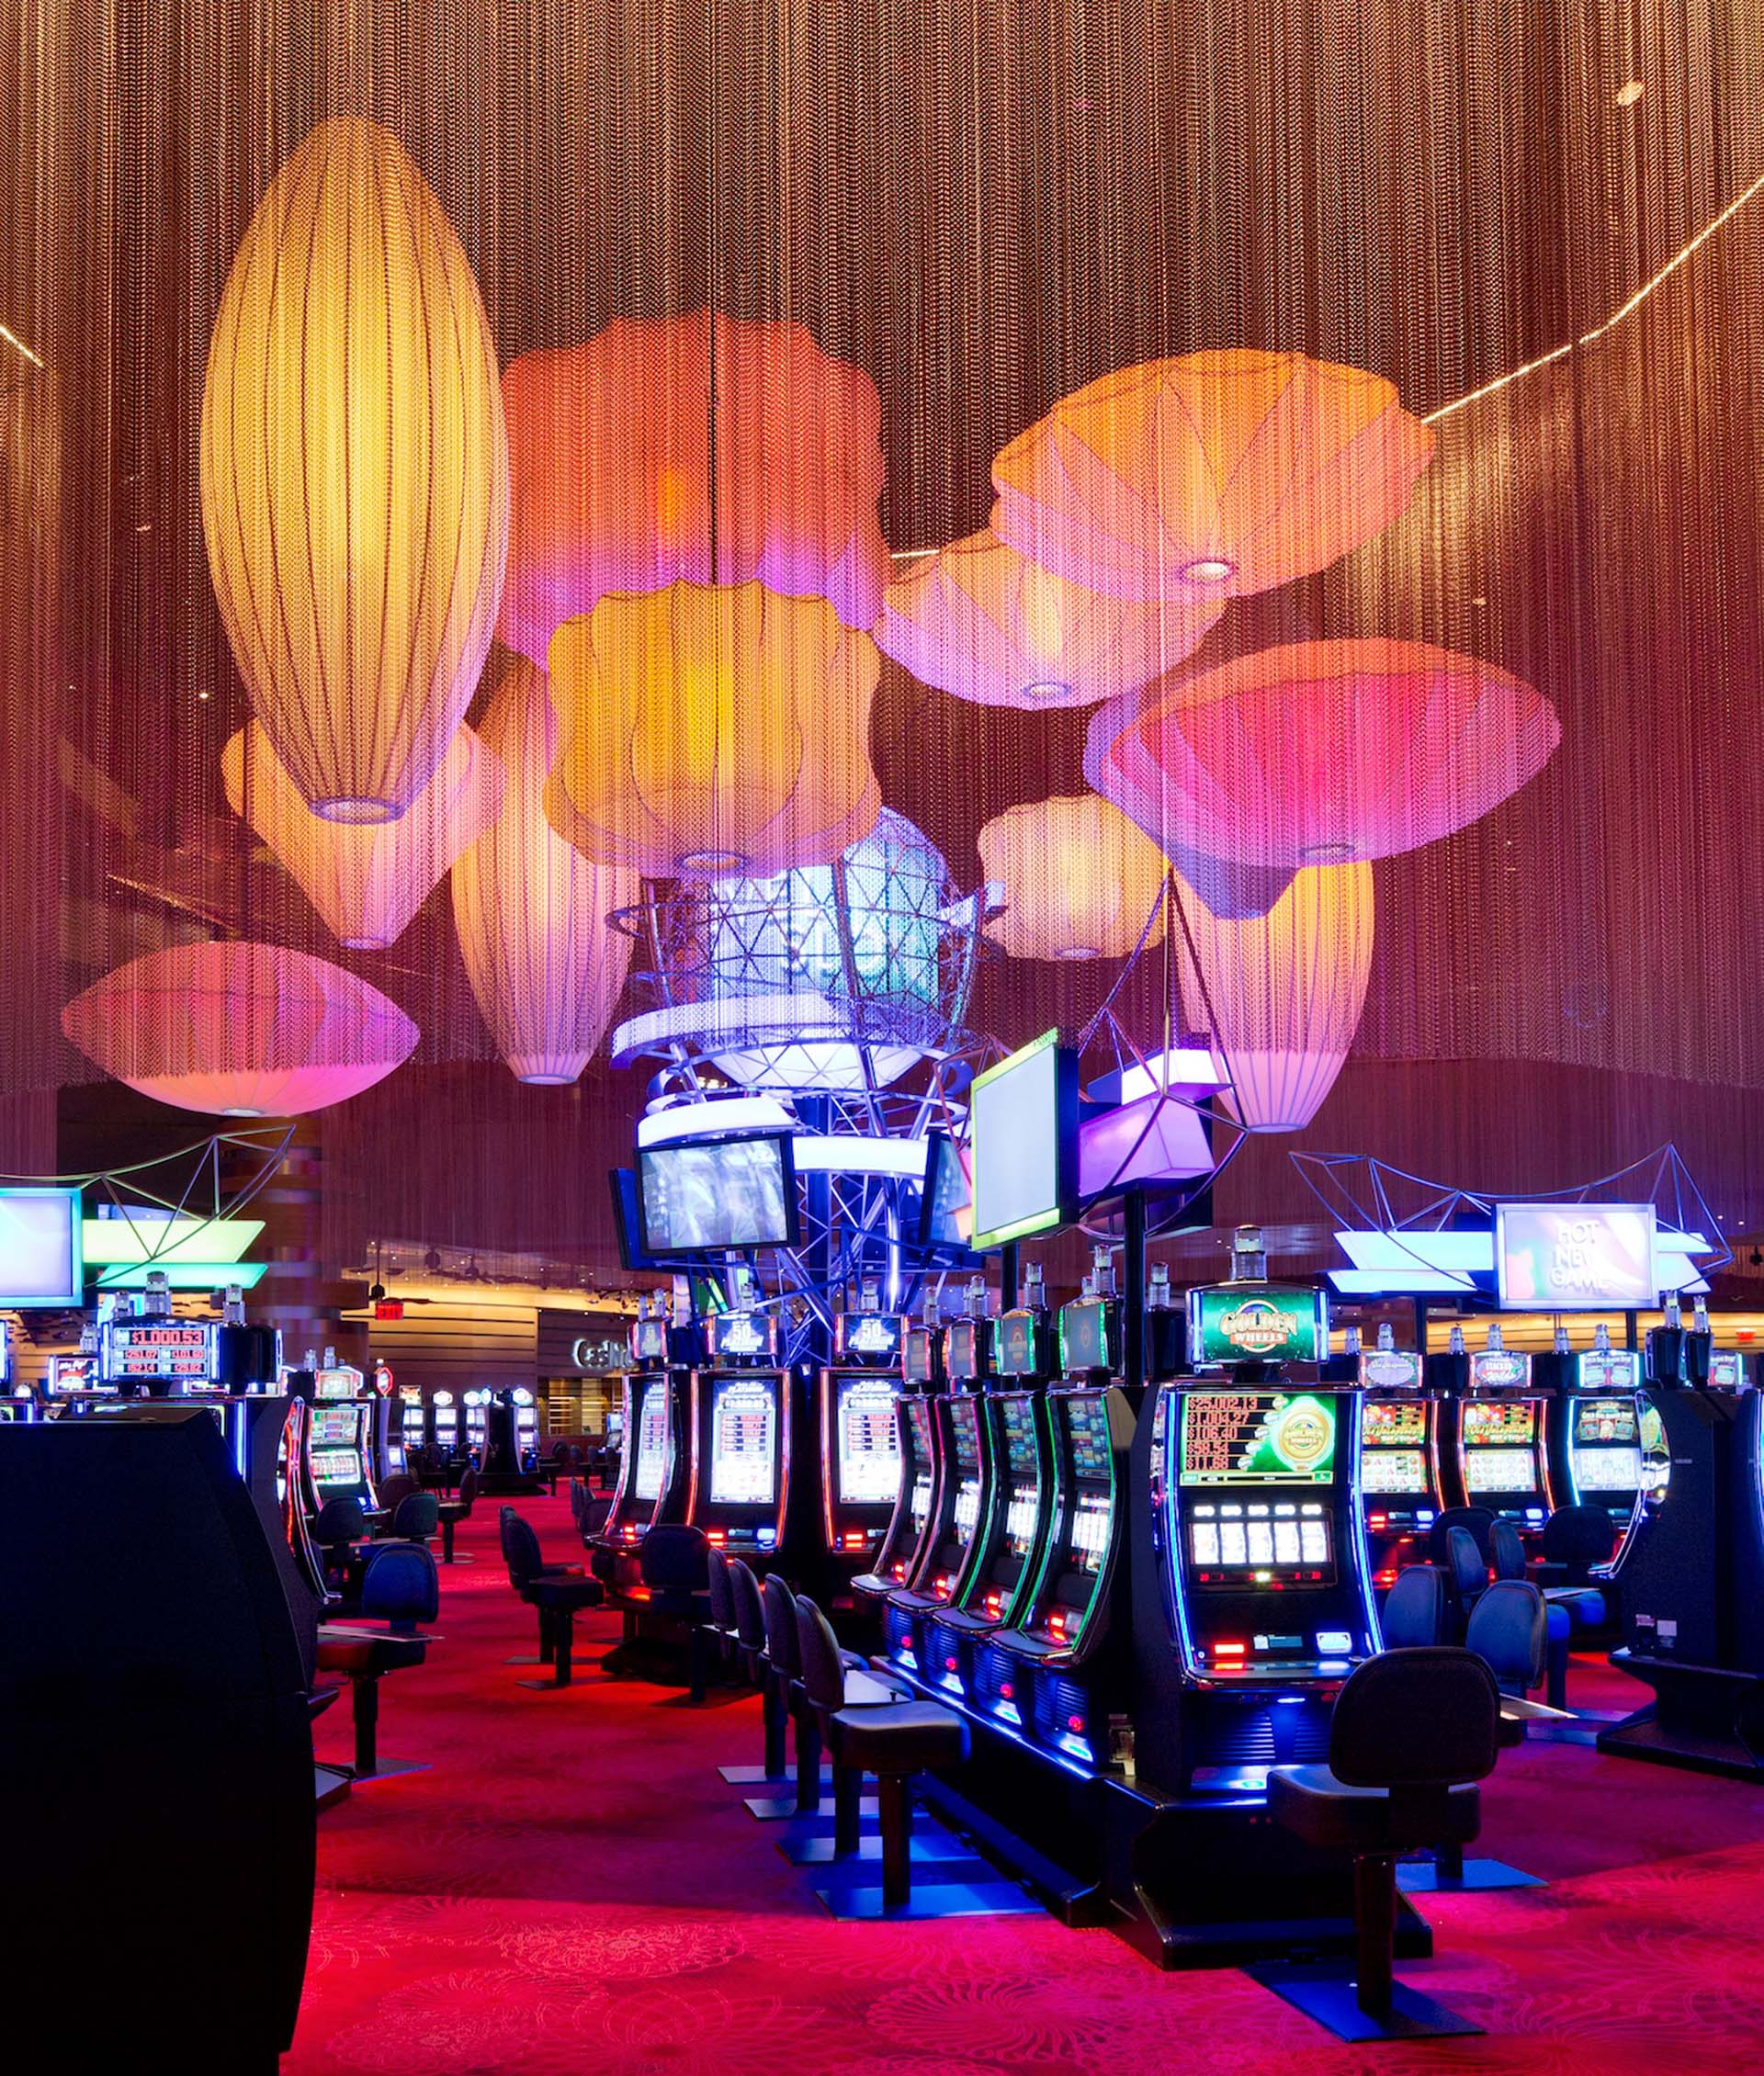 Revel Casino